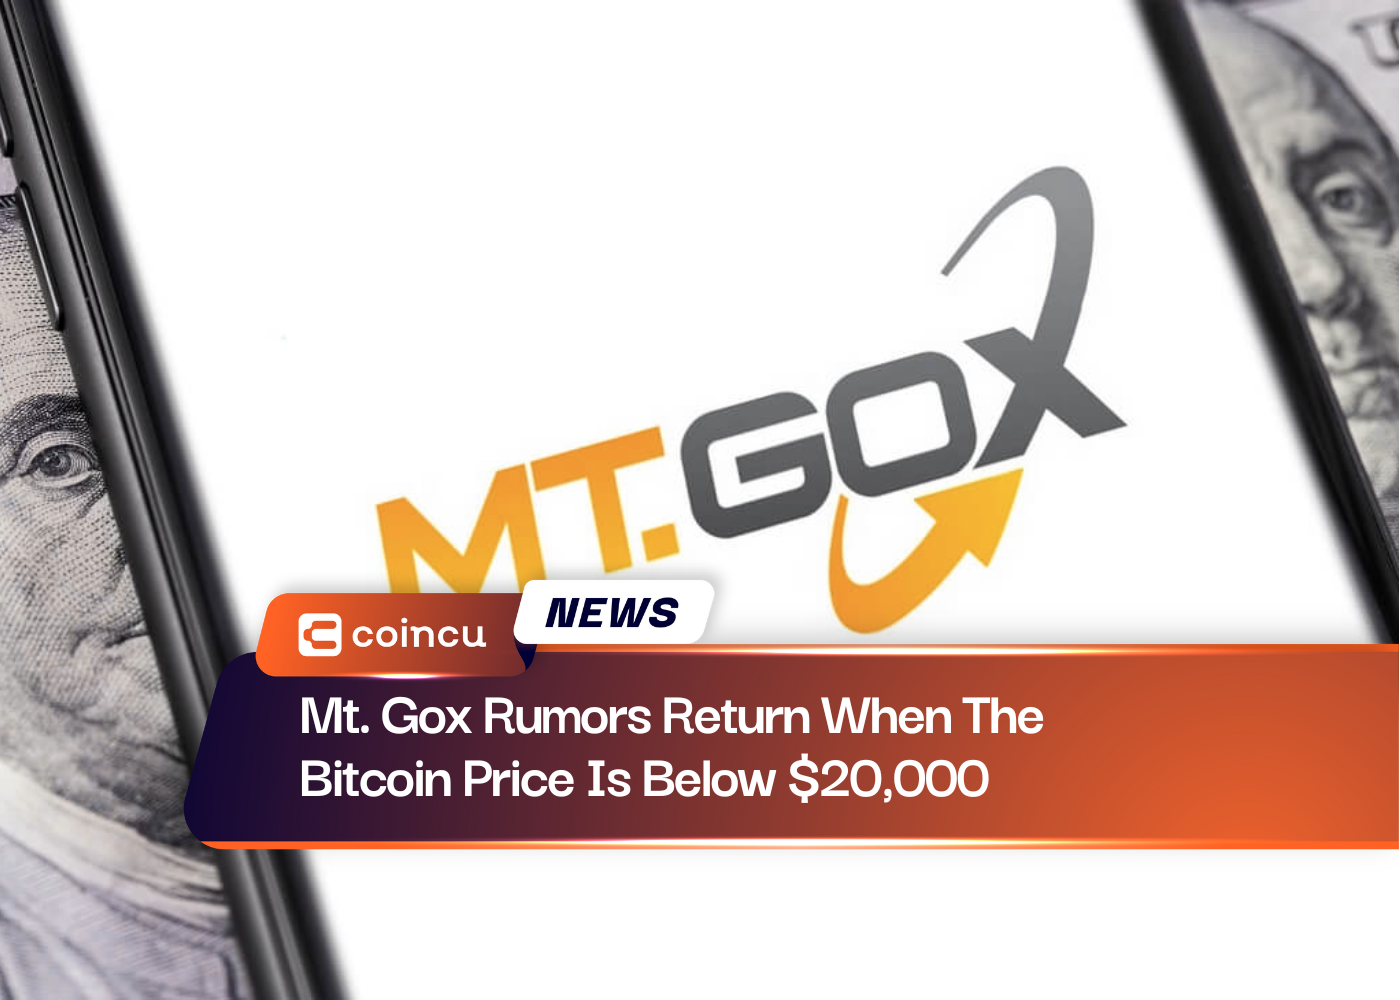 Mt. Gox Rumors Return When The Bitcoin Price Is Below $20,000